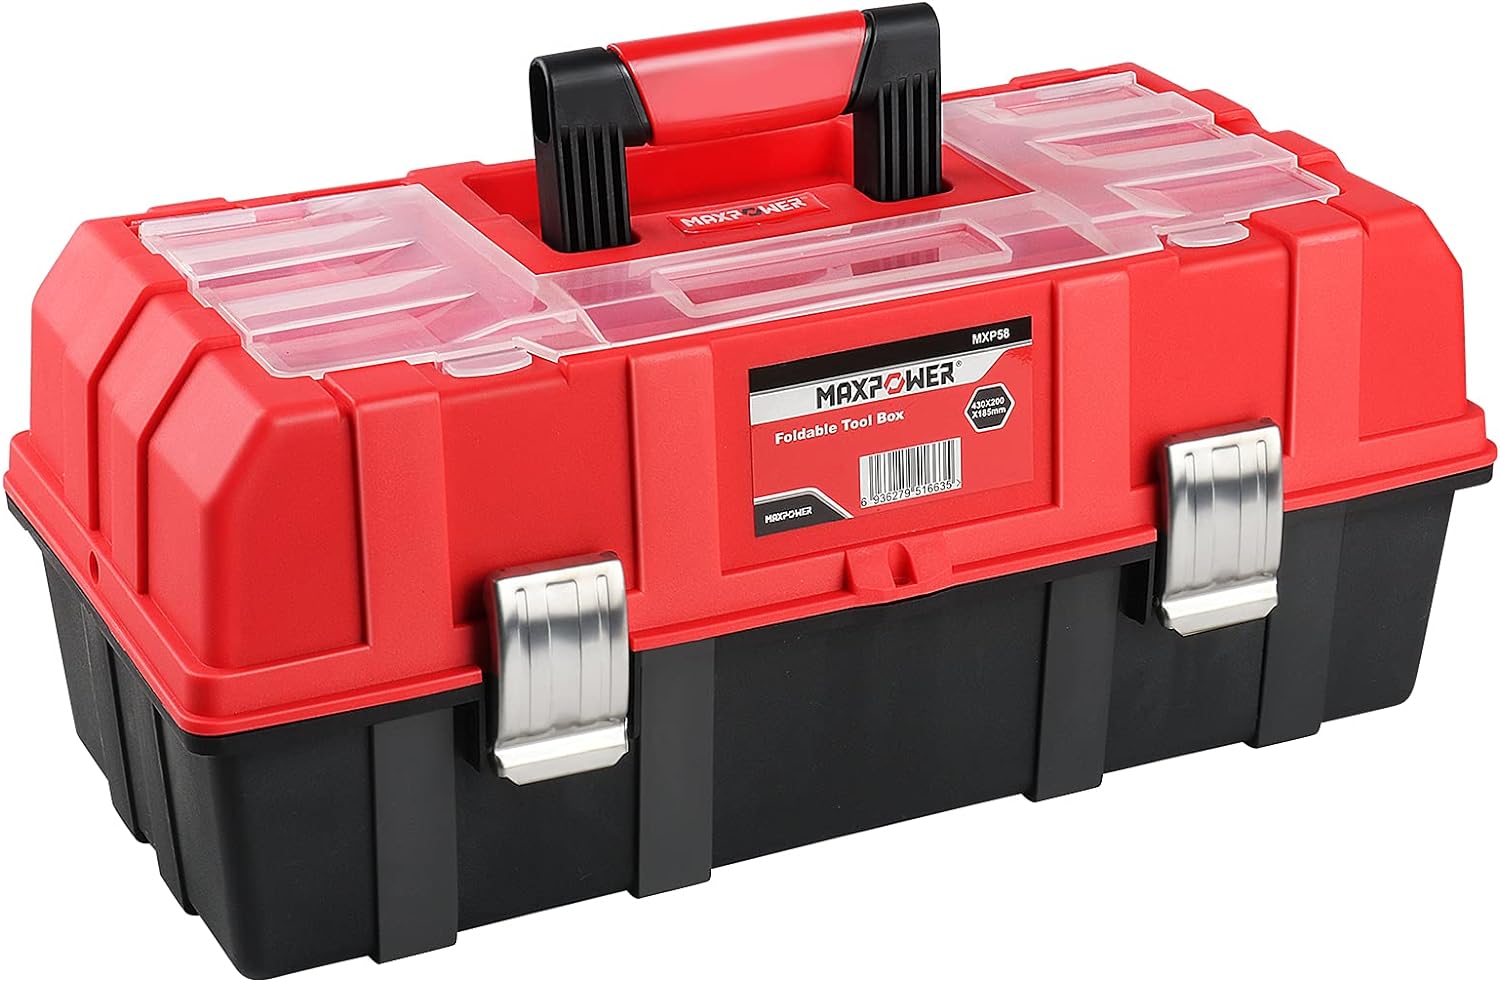 MAXPOWER 17-Inch Tool Box, Three-Layer Folding Plastic Storage